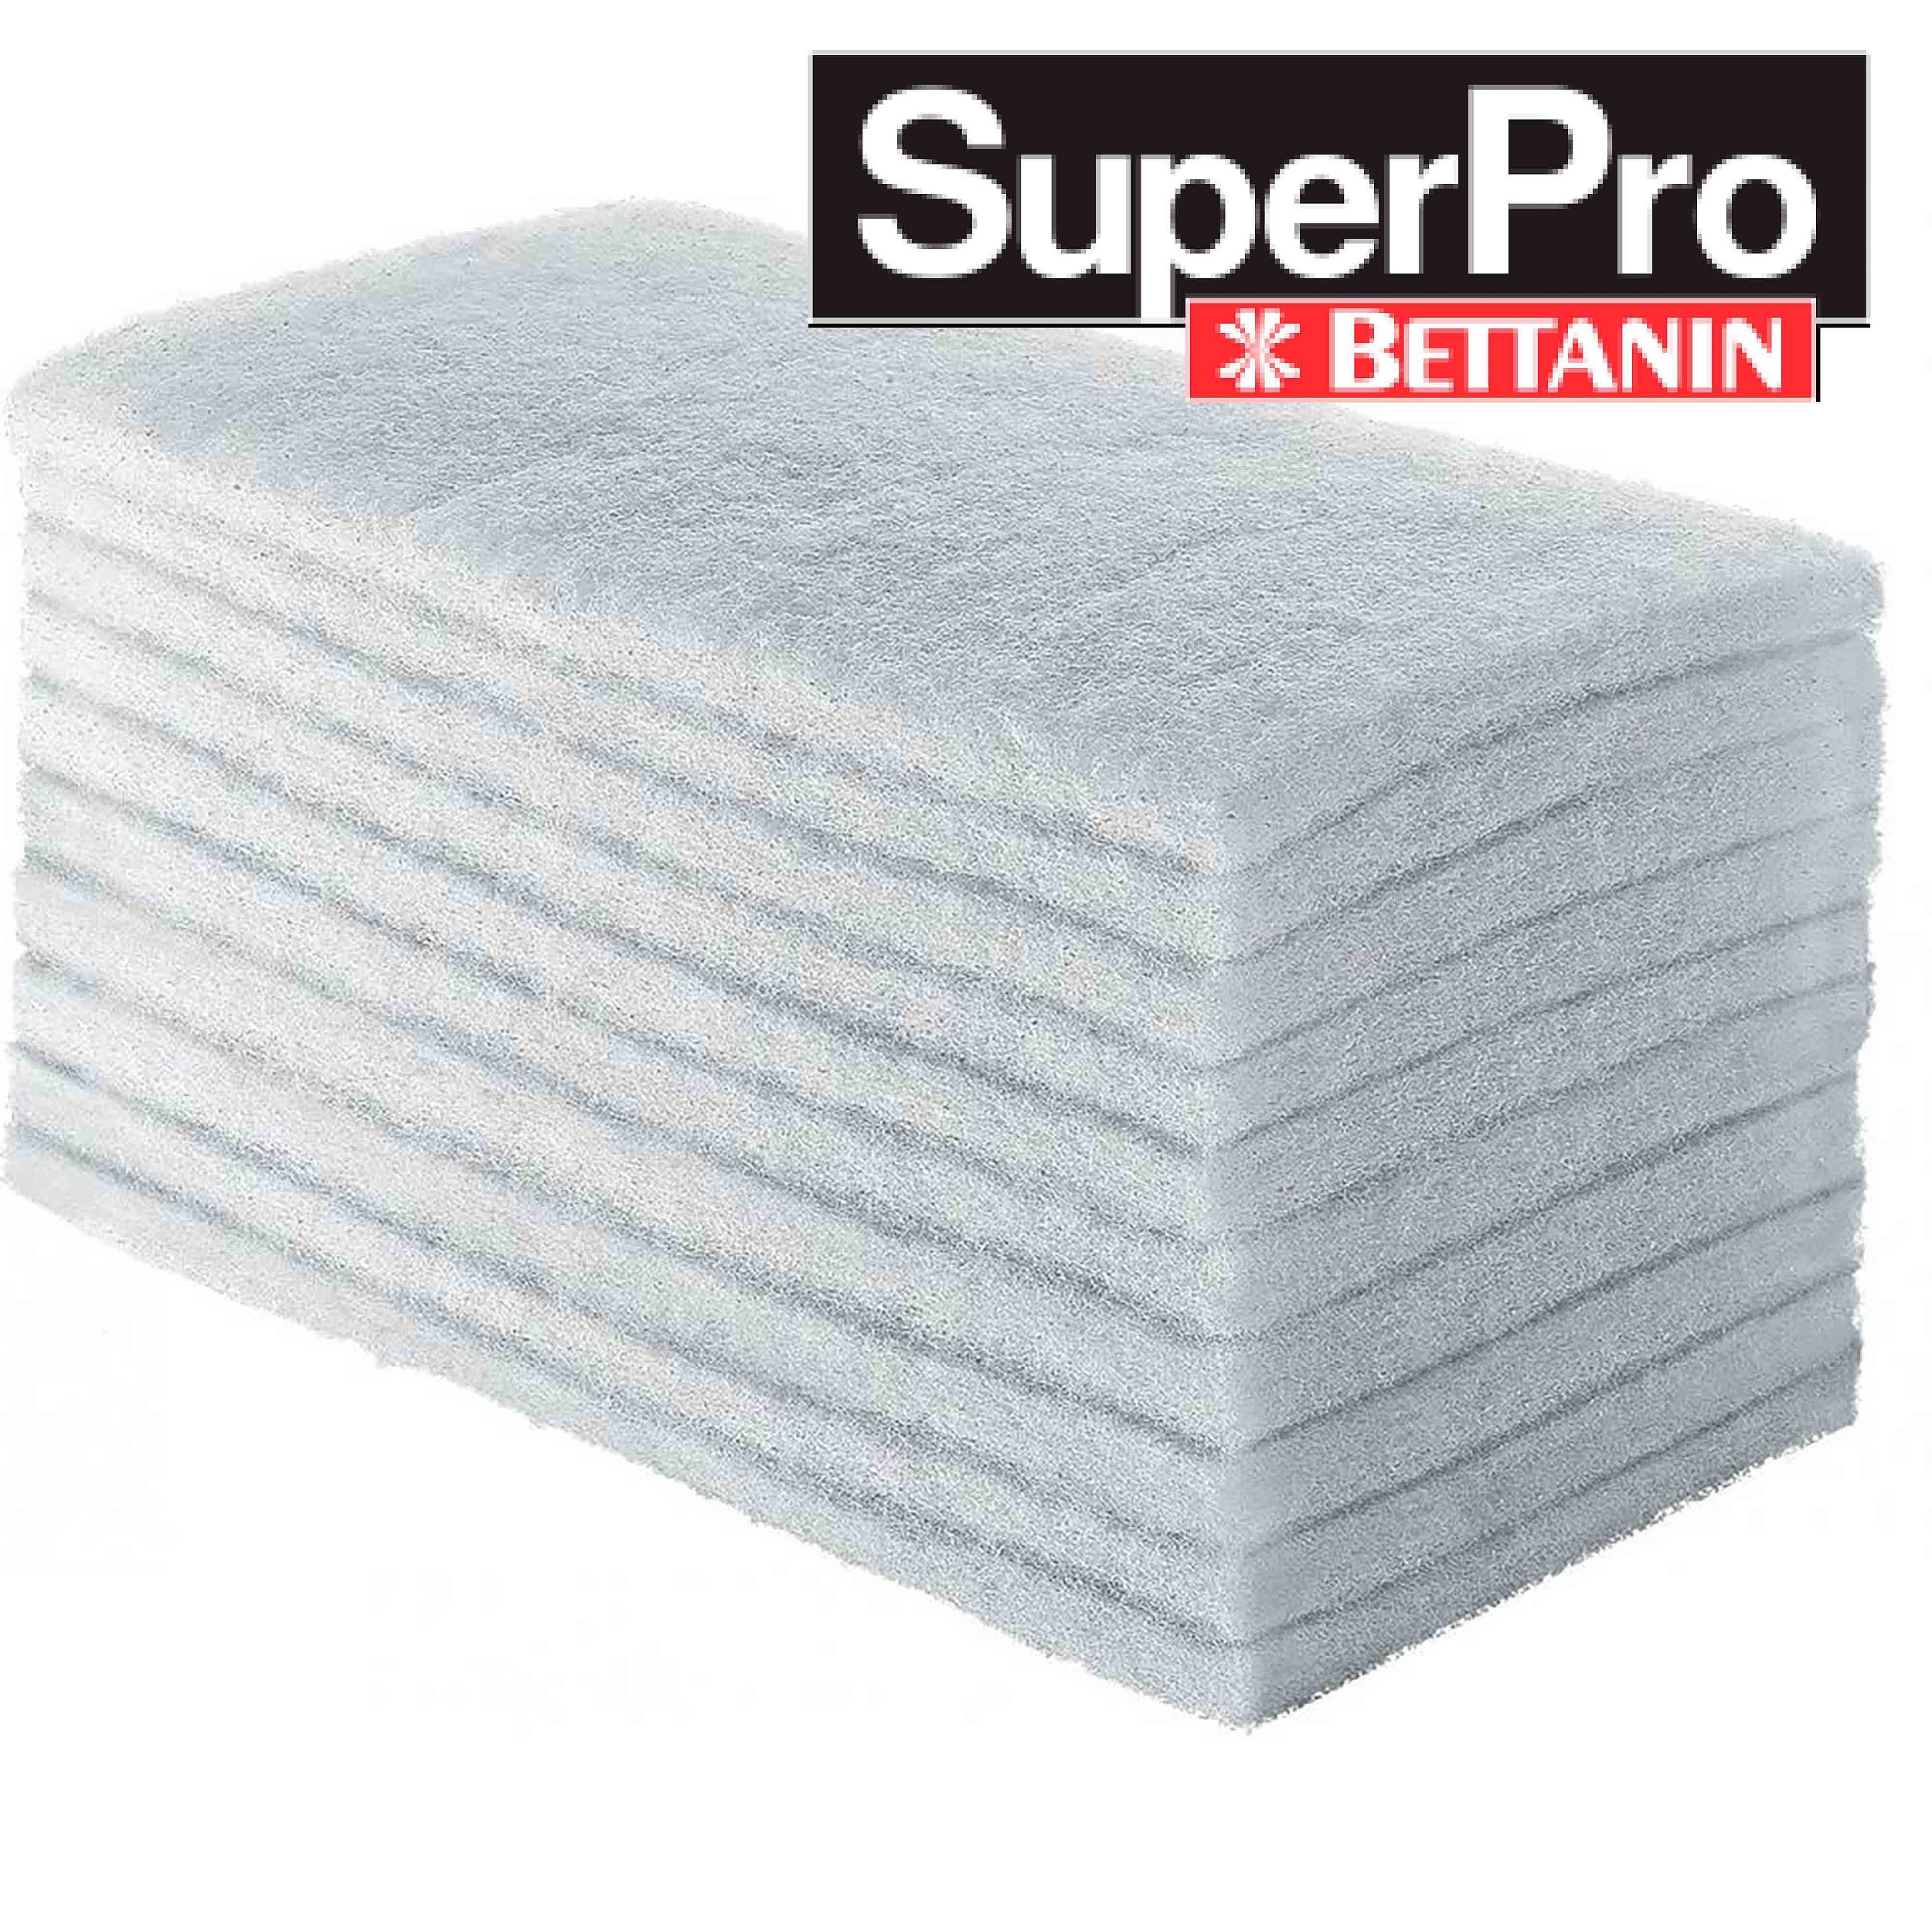 Fibra Branca De Limpeza Leve Slim Com 10 Unidades SuperPro Bettanin - NC  Bella Distribuidora - Distribuidora de Produtos e Equipamentos